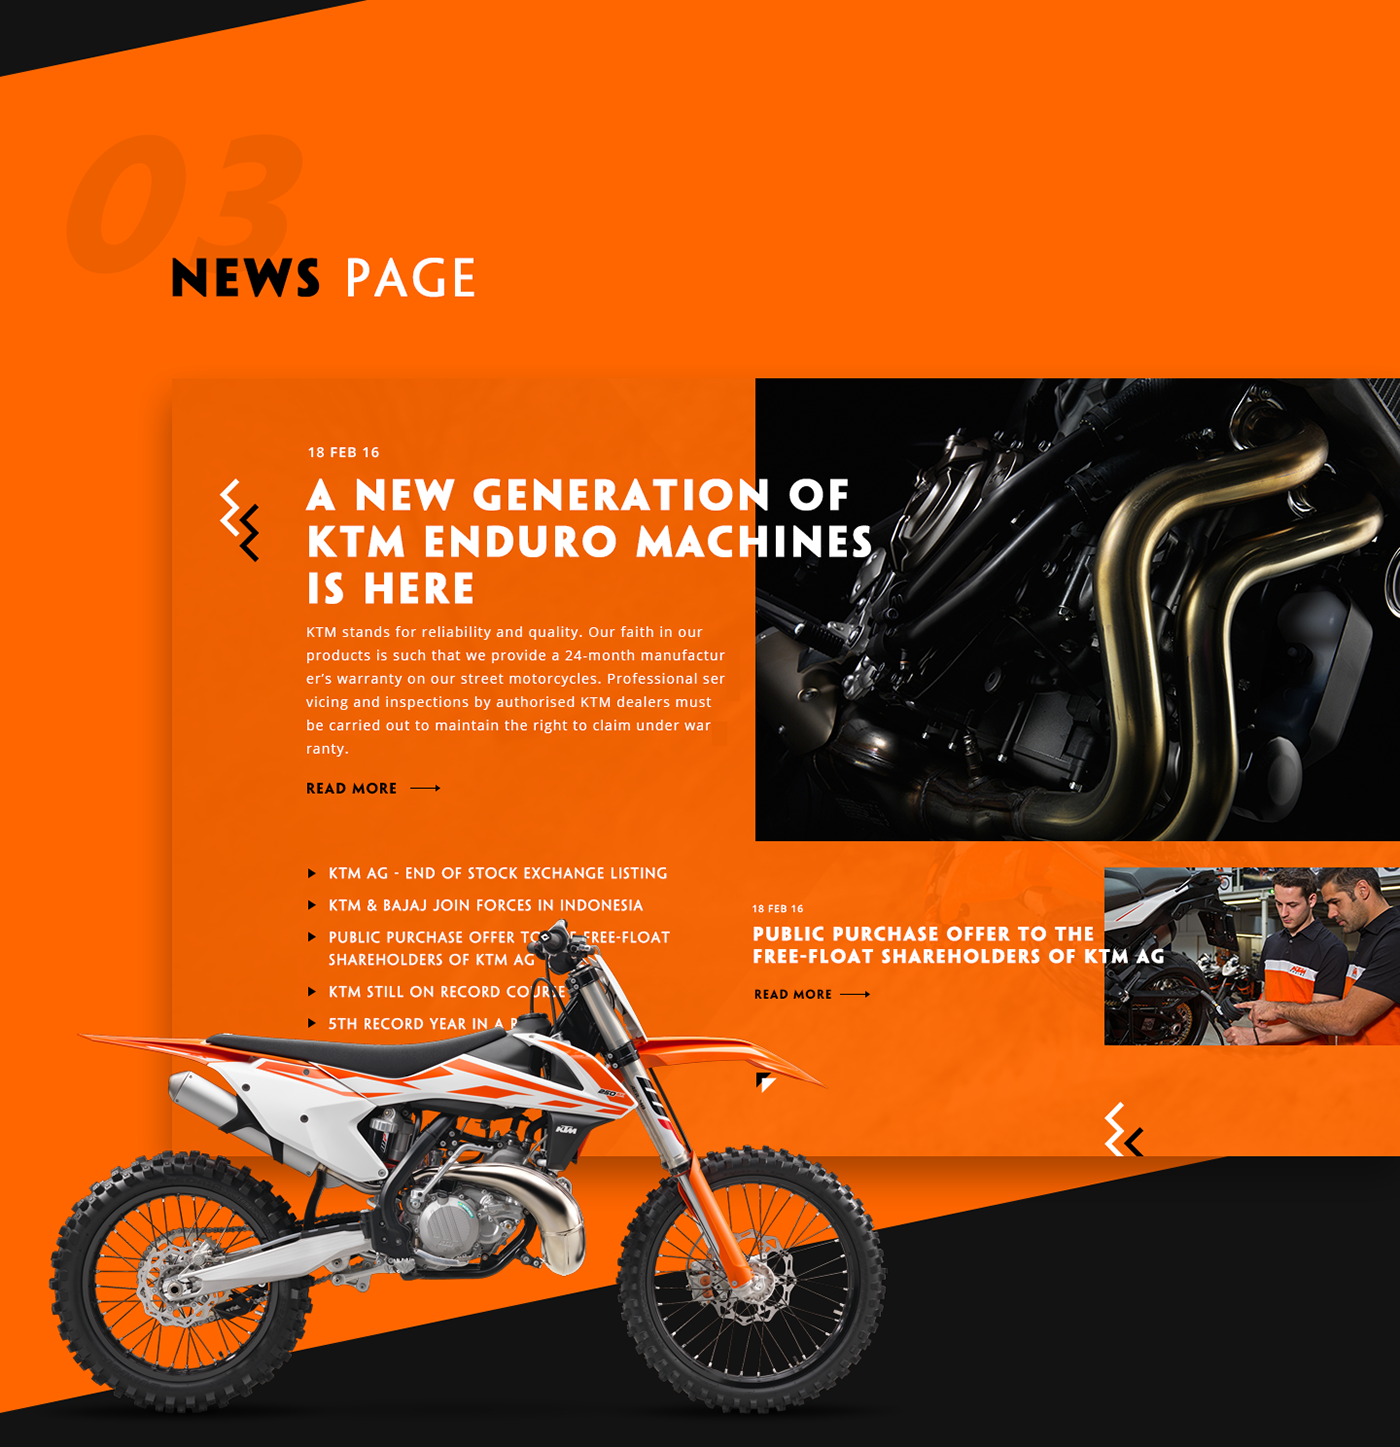 uiux website redesign ktm moto Motor show ktm redesign oranges flat design ios 10 material UI Interface weeds brand